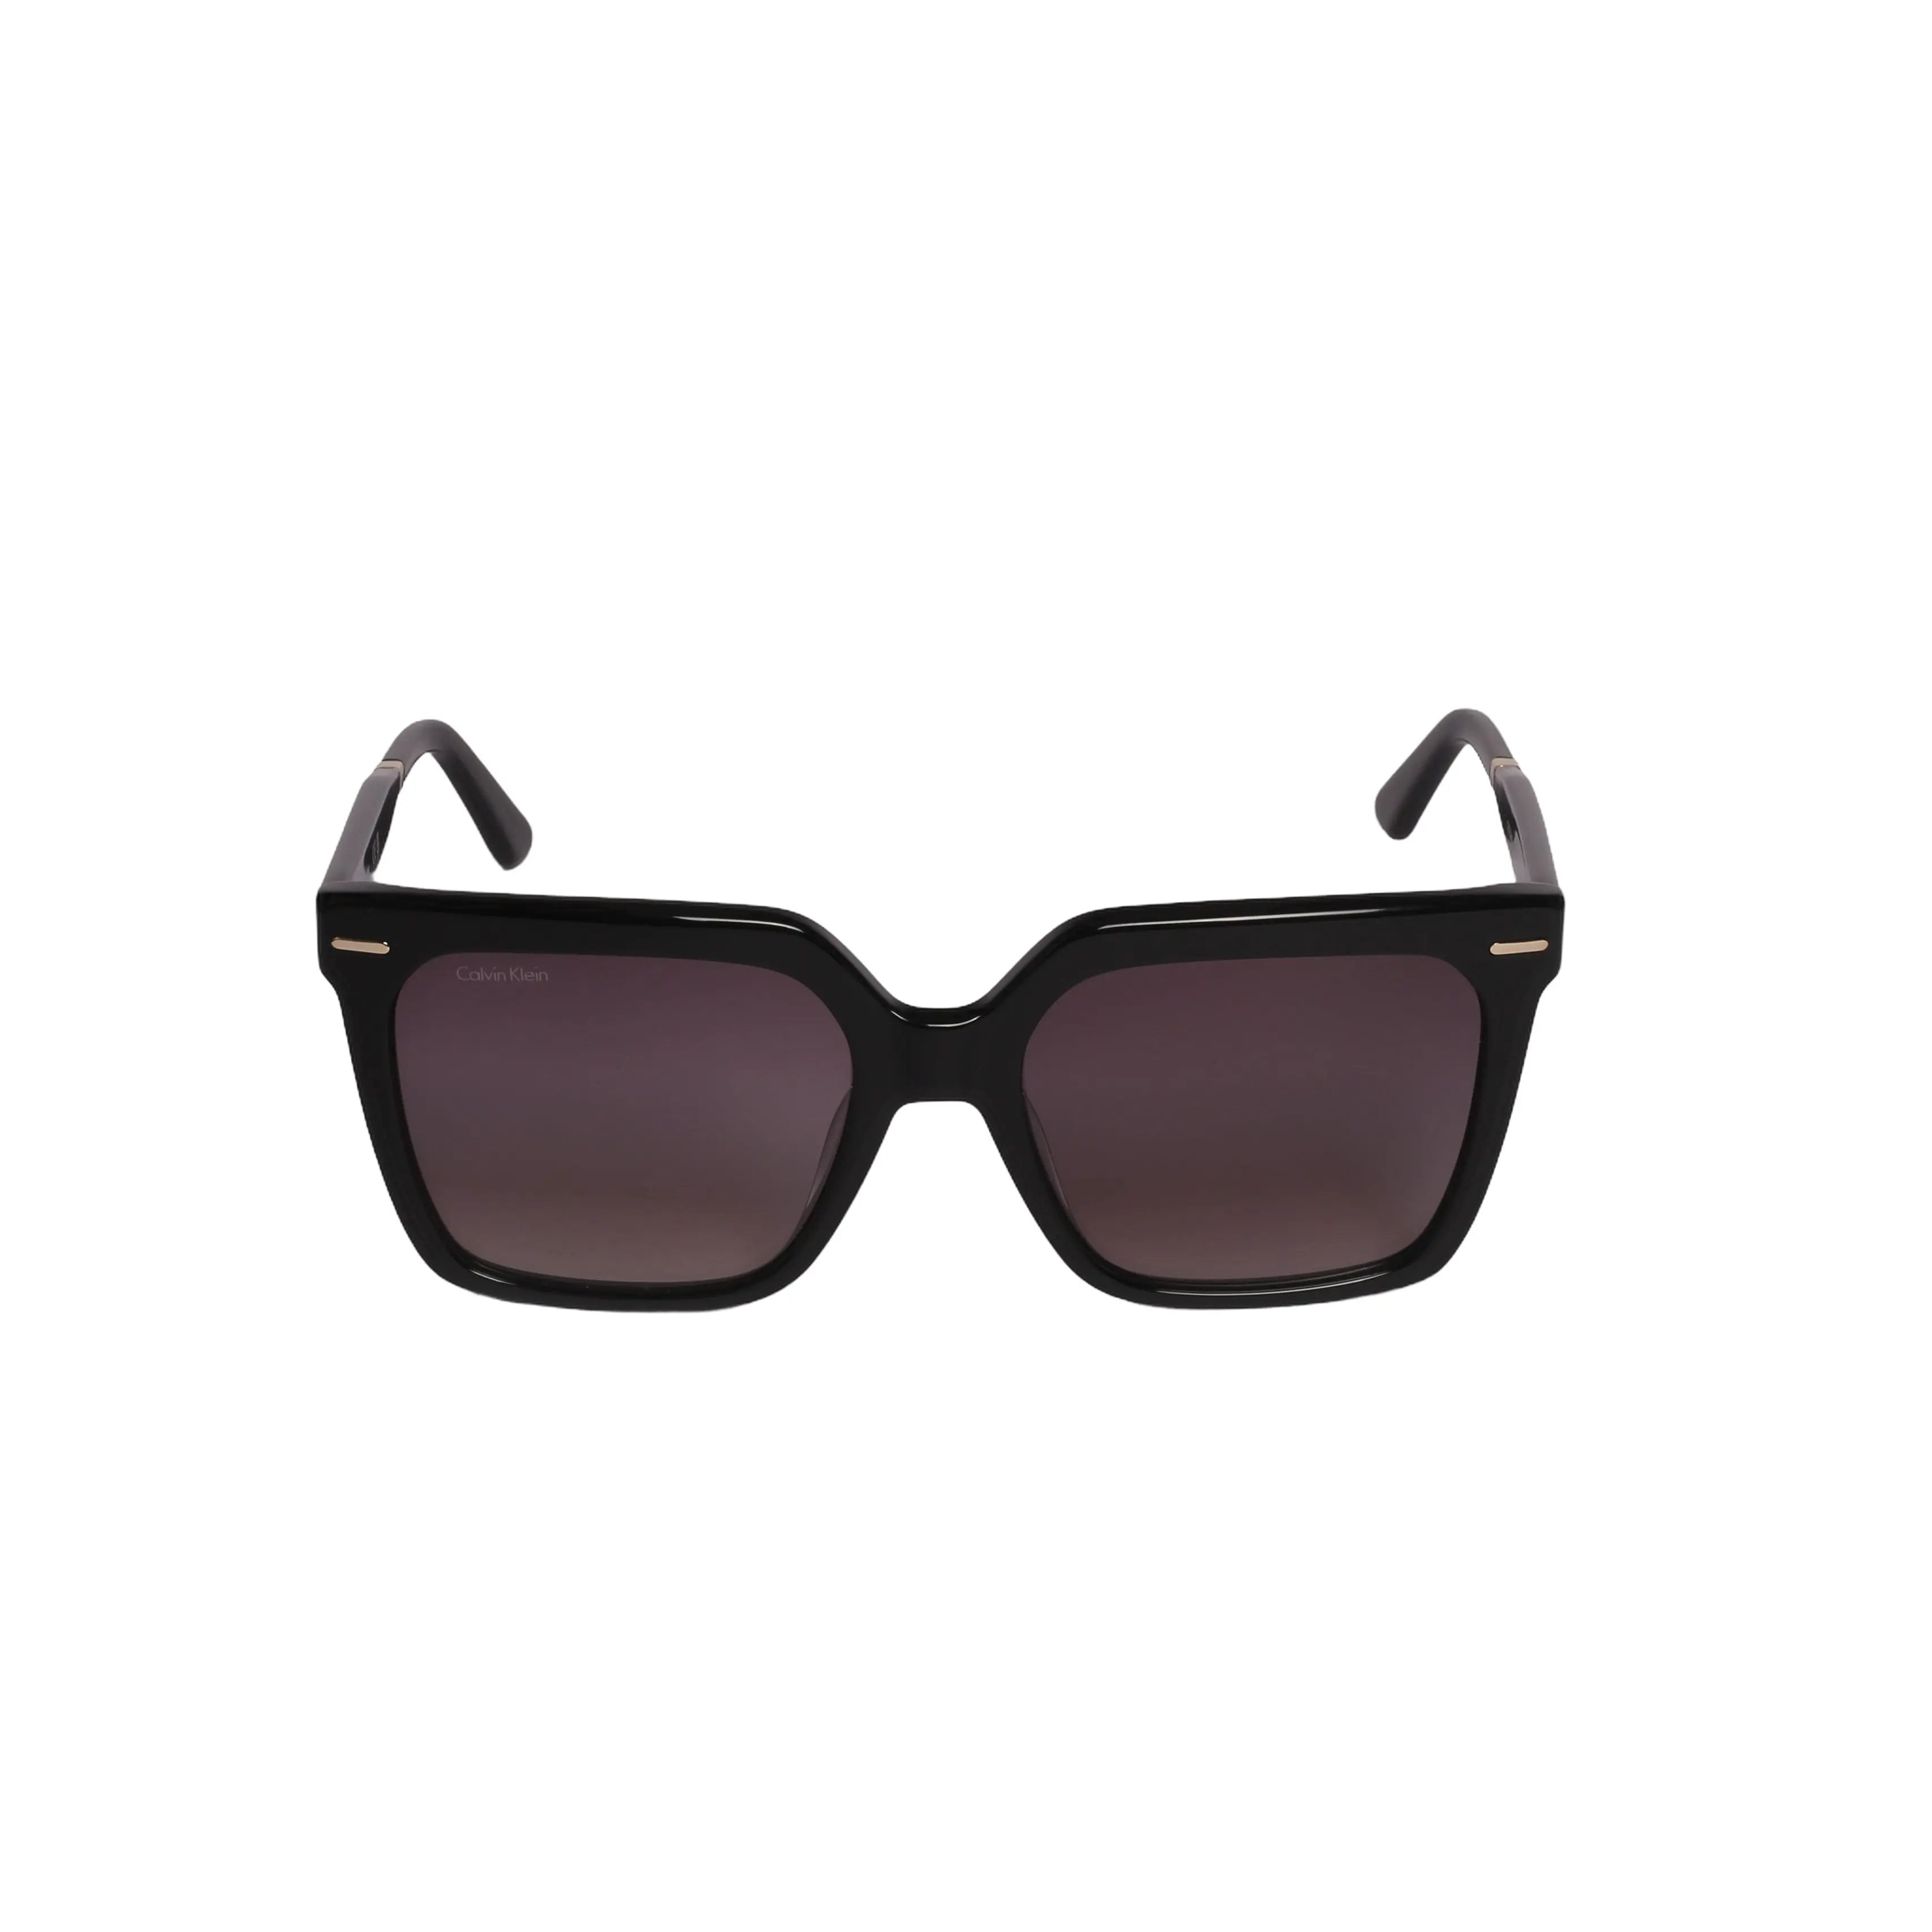 Calvin Klein CK-CK 22534-55-001 Sunglasses - Premium Sunglasses from Calvin Klein - Just Rs. 9900! Shop now at Laxmi Opticians